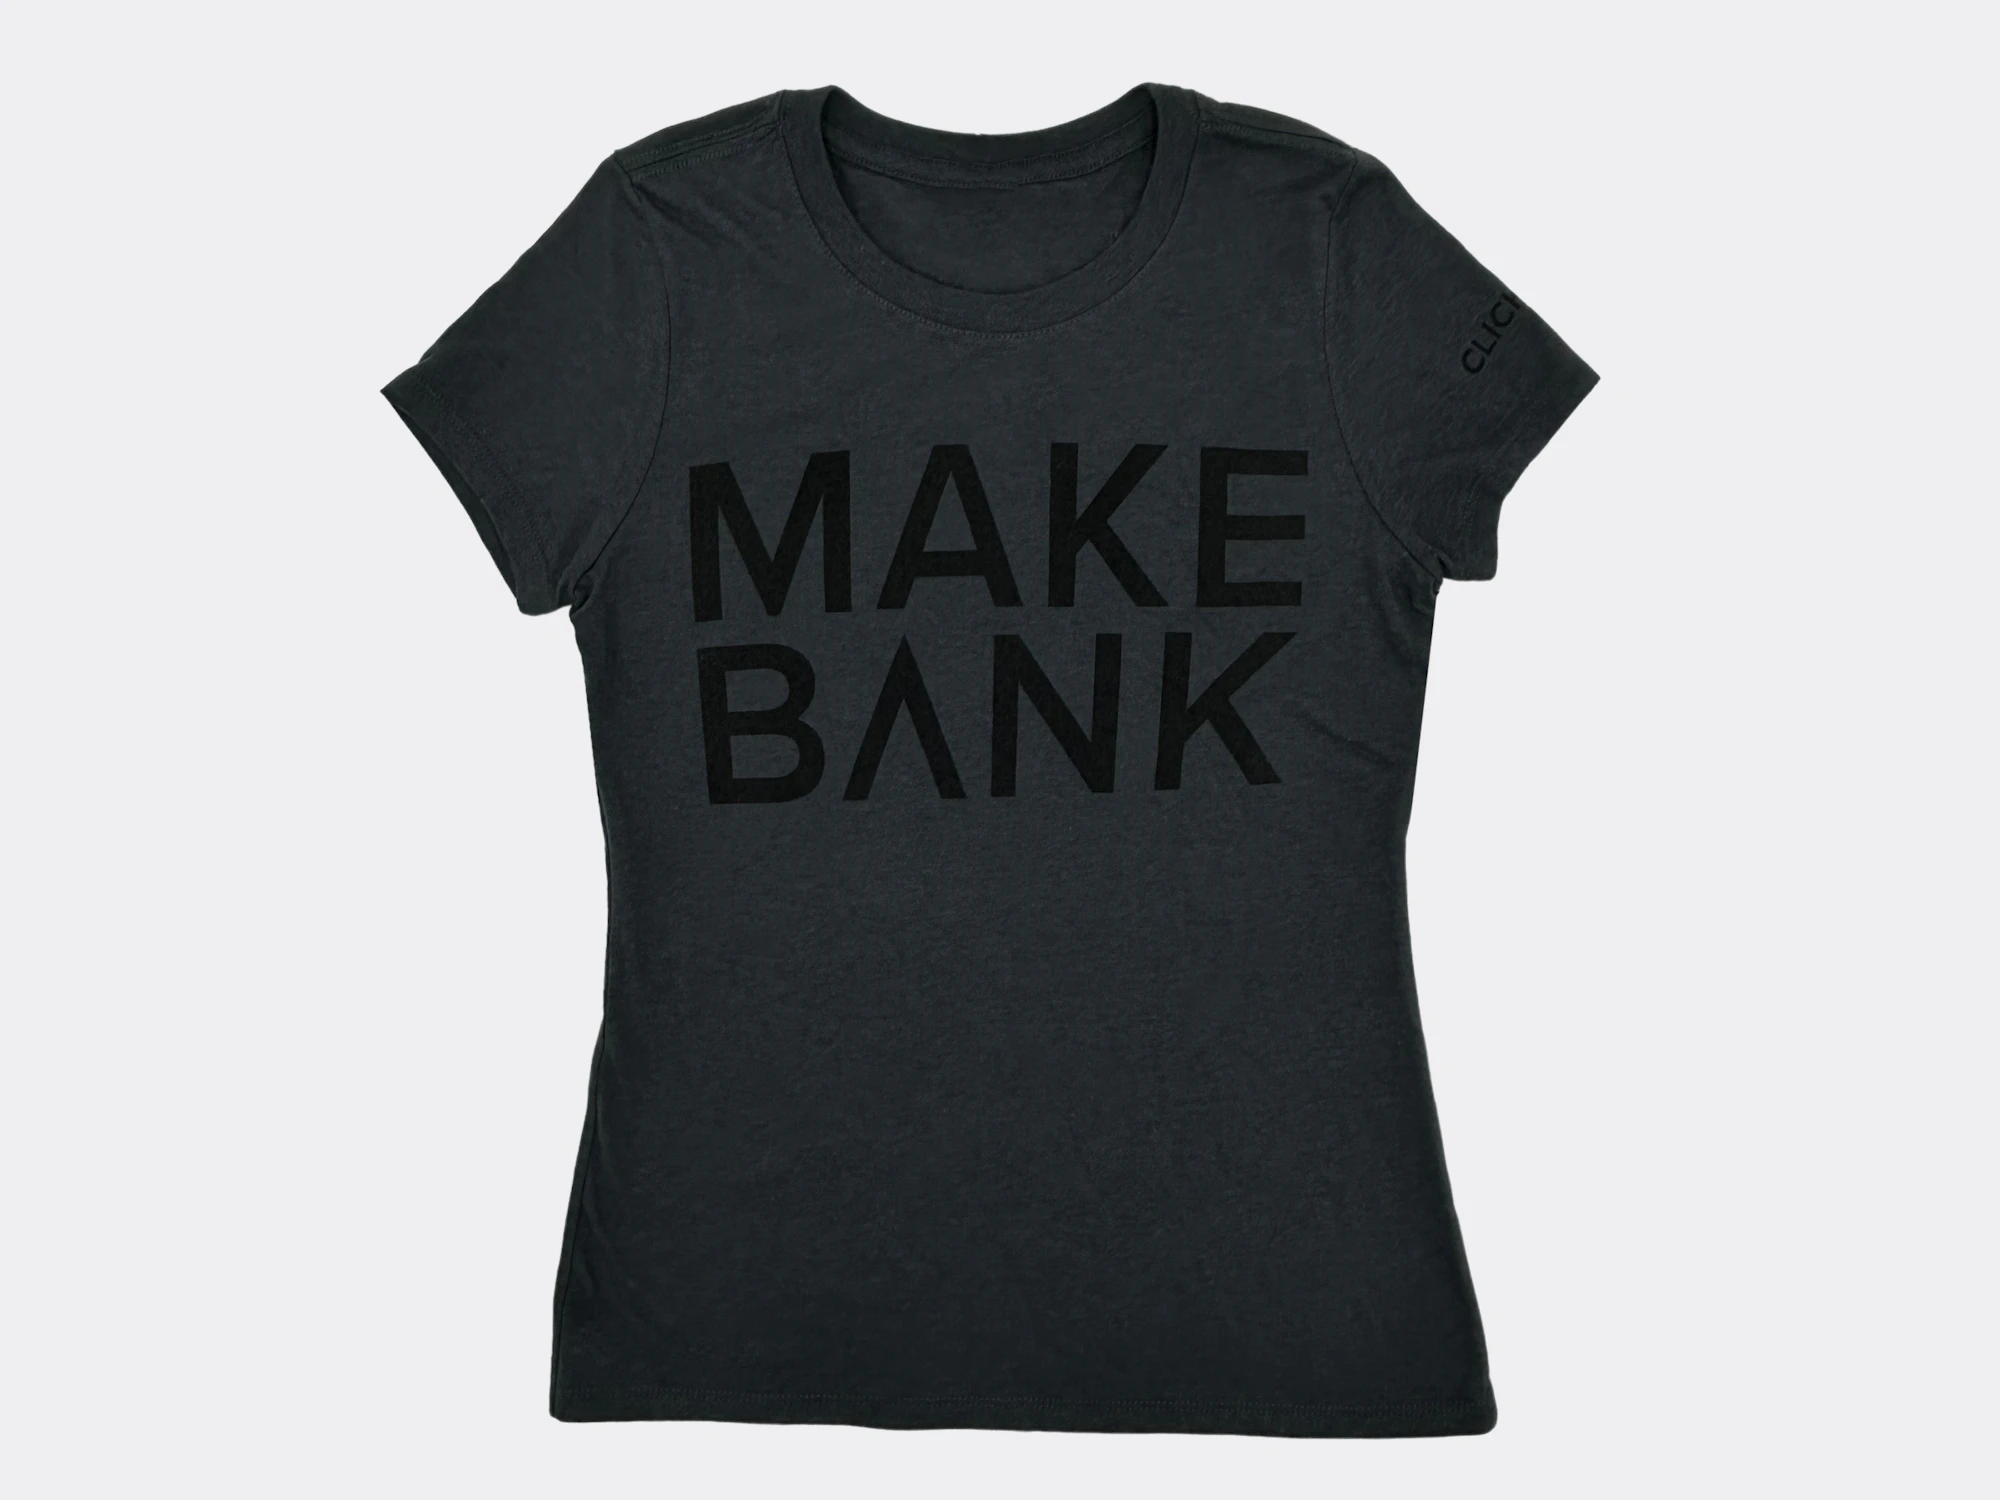 ClickBank Women's Gray/Black Make Bank T-Shirt